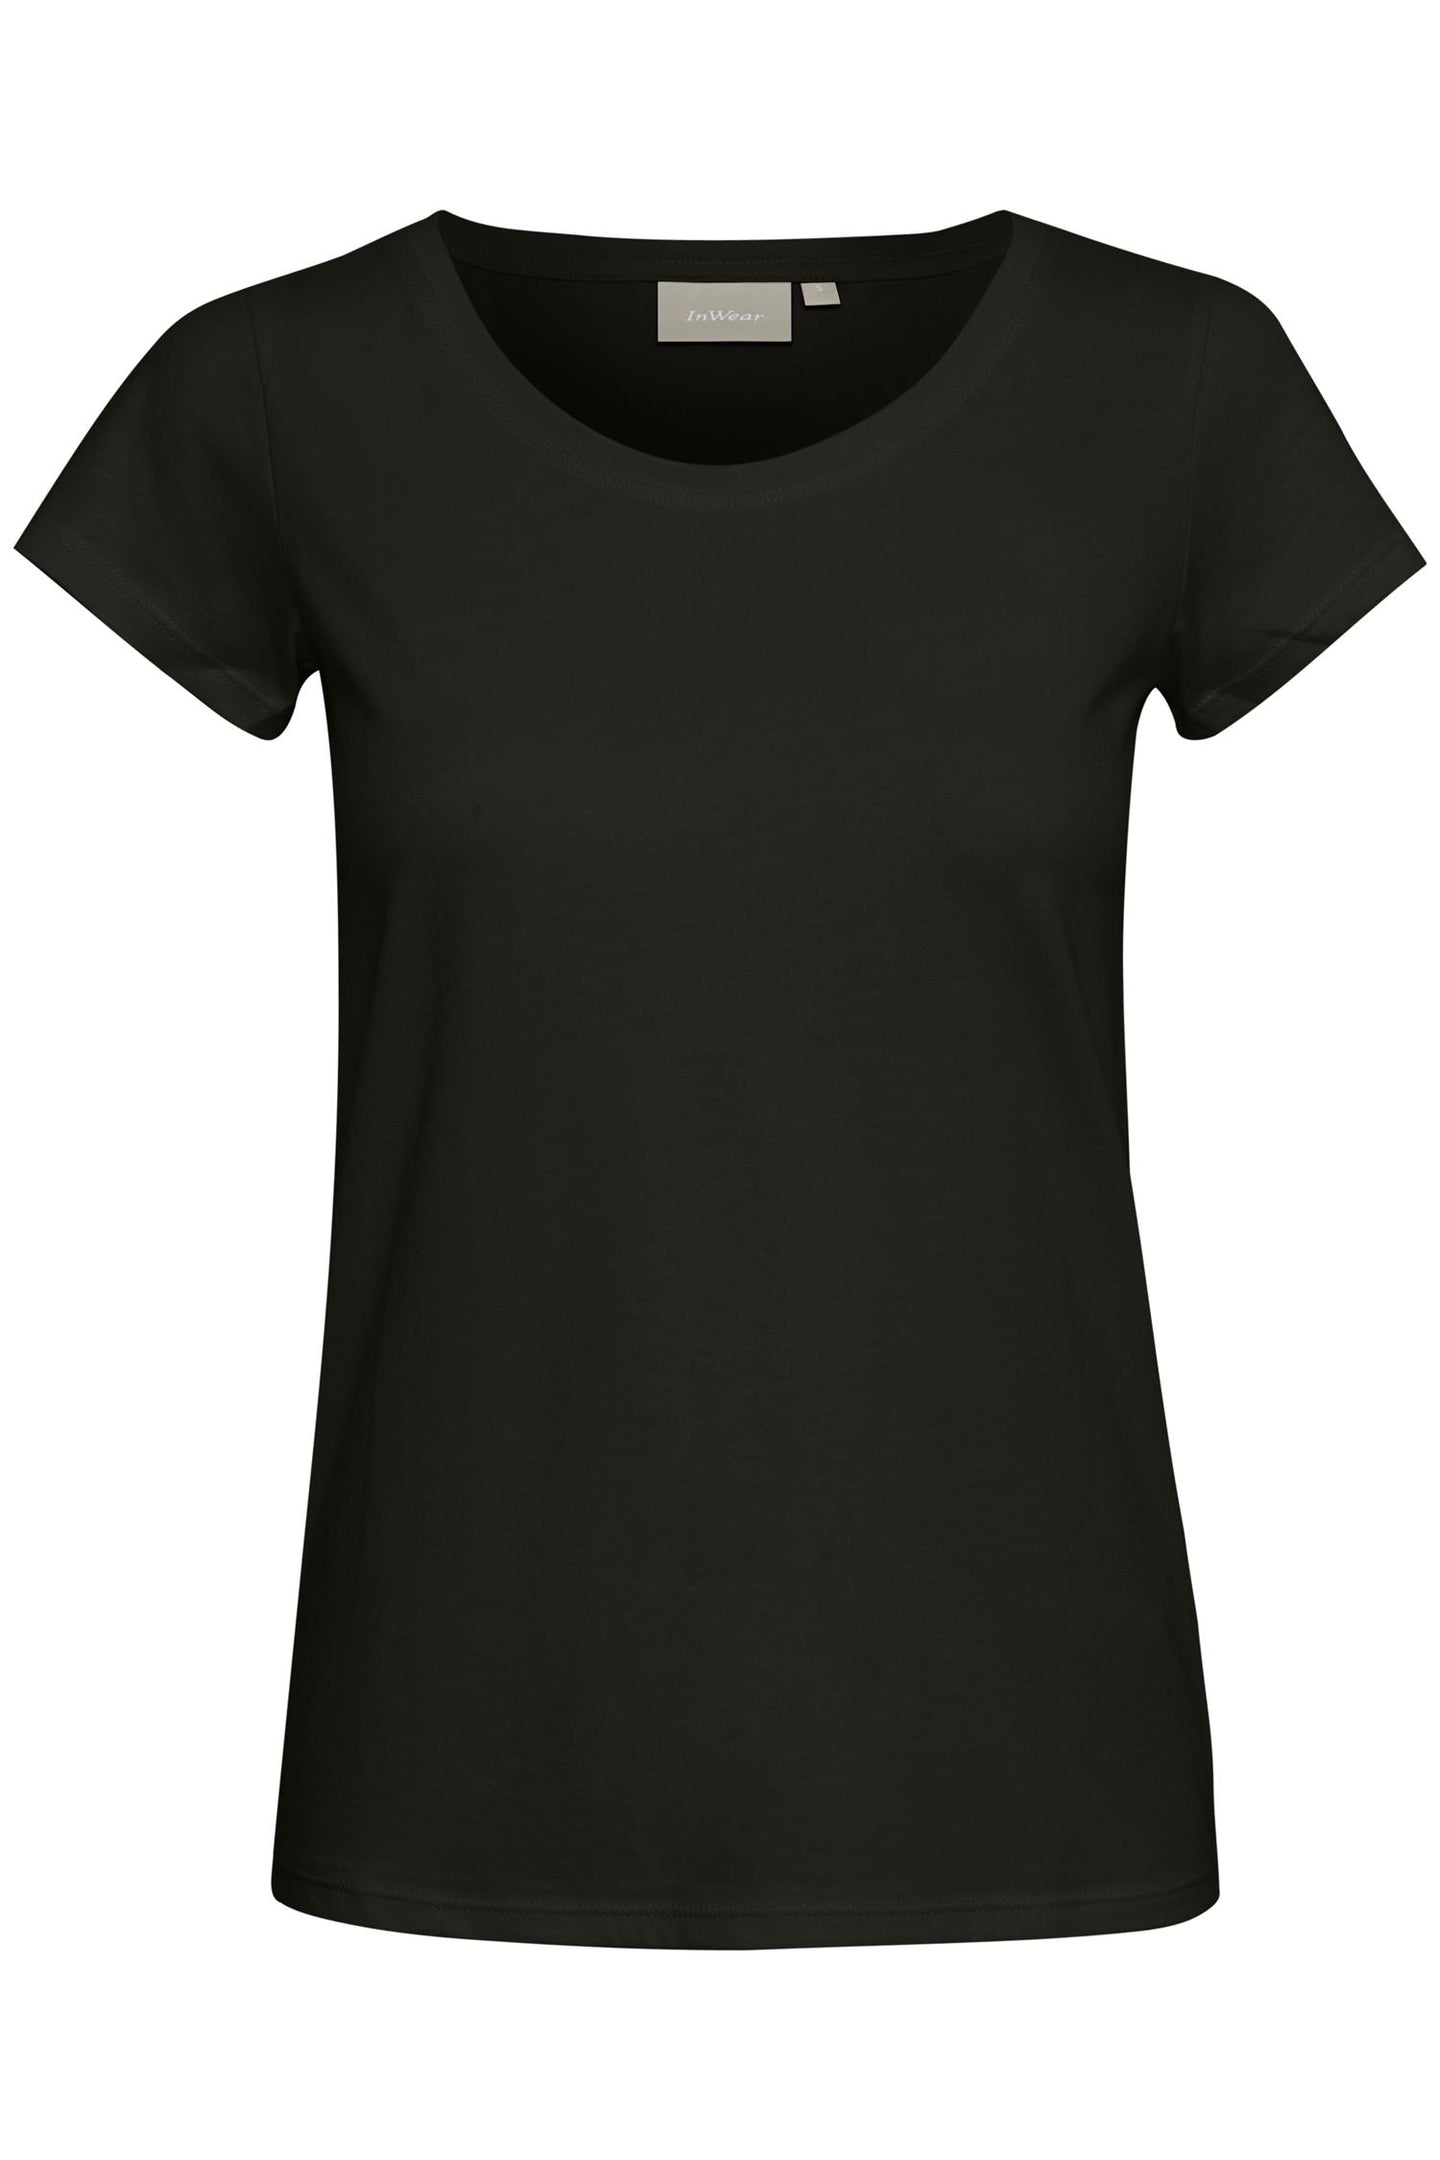 Rena o-neck t-shirt black